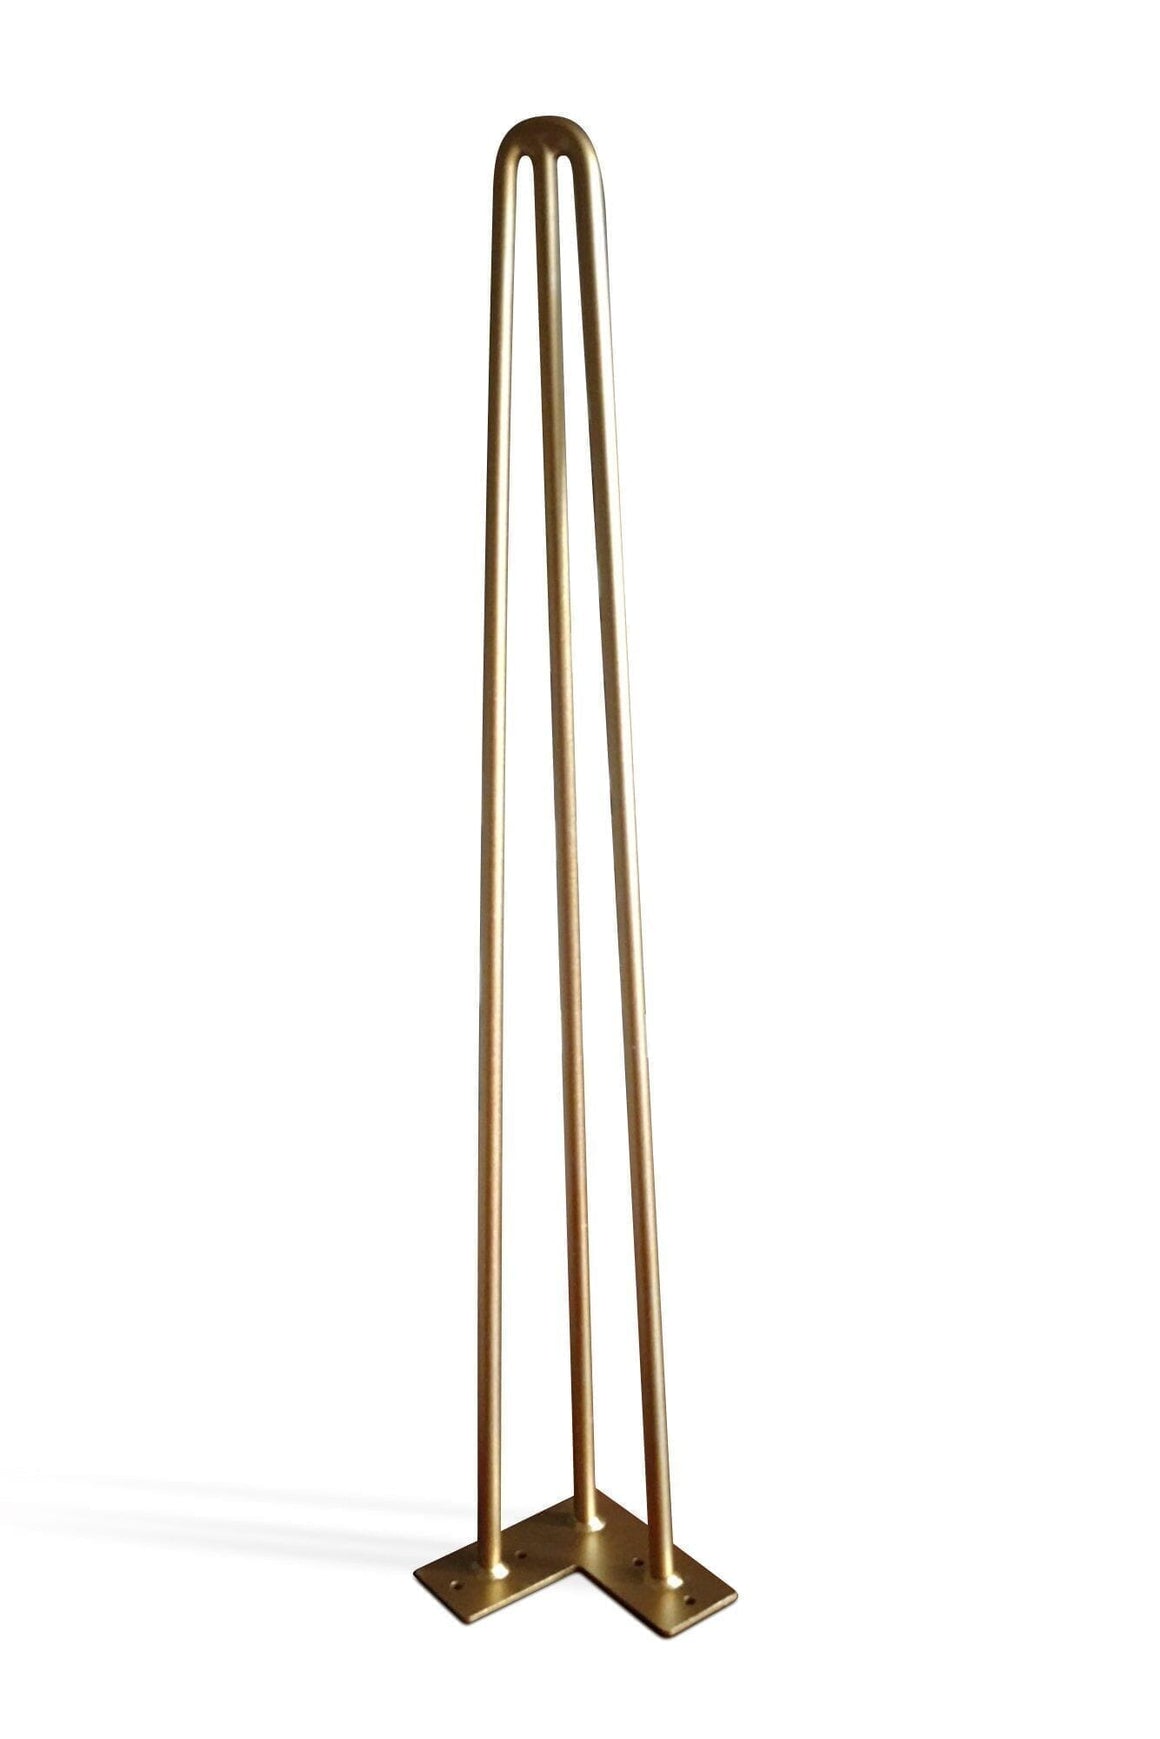 Premium 3 Rod Hairpin Legs 1/2" Diameter Brass - Set of 4 - 28" Tall - Rustic Deco Incorporated